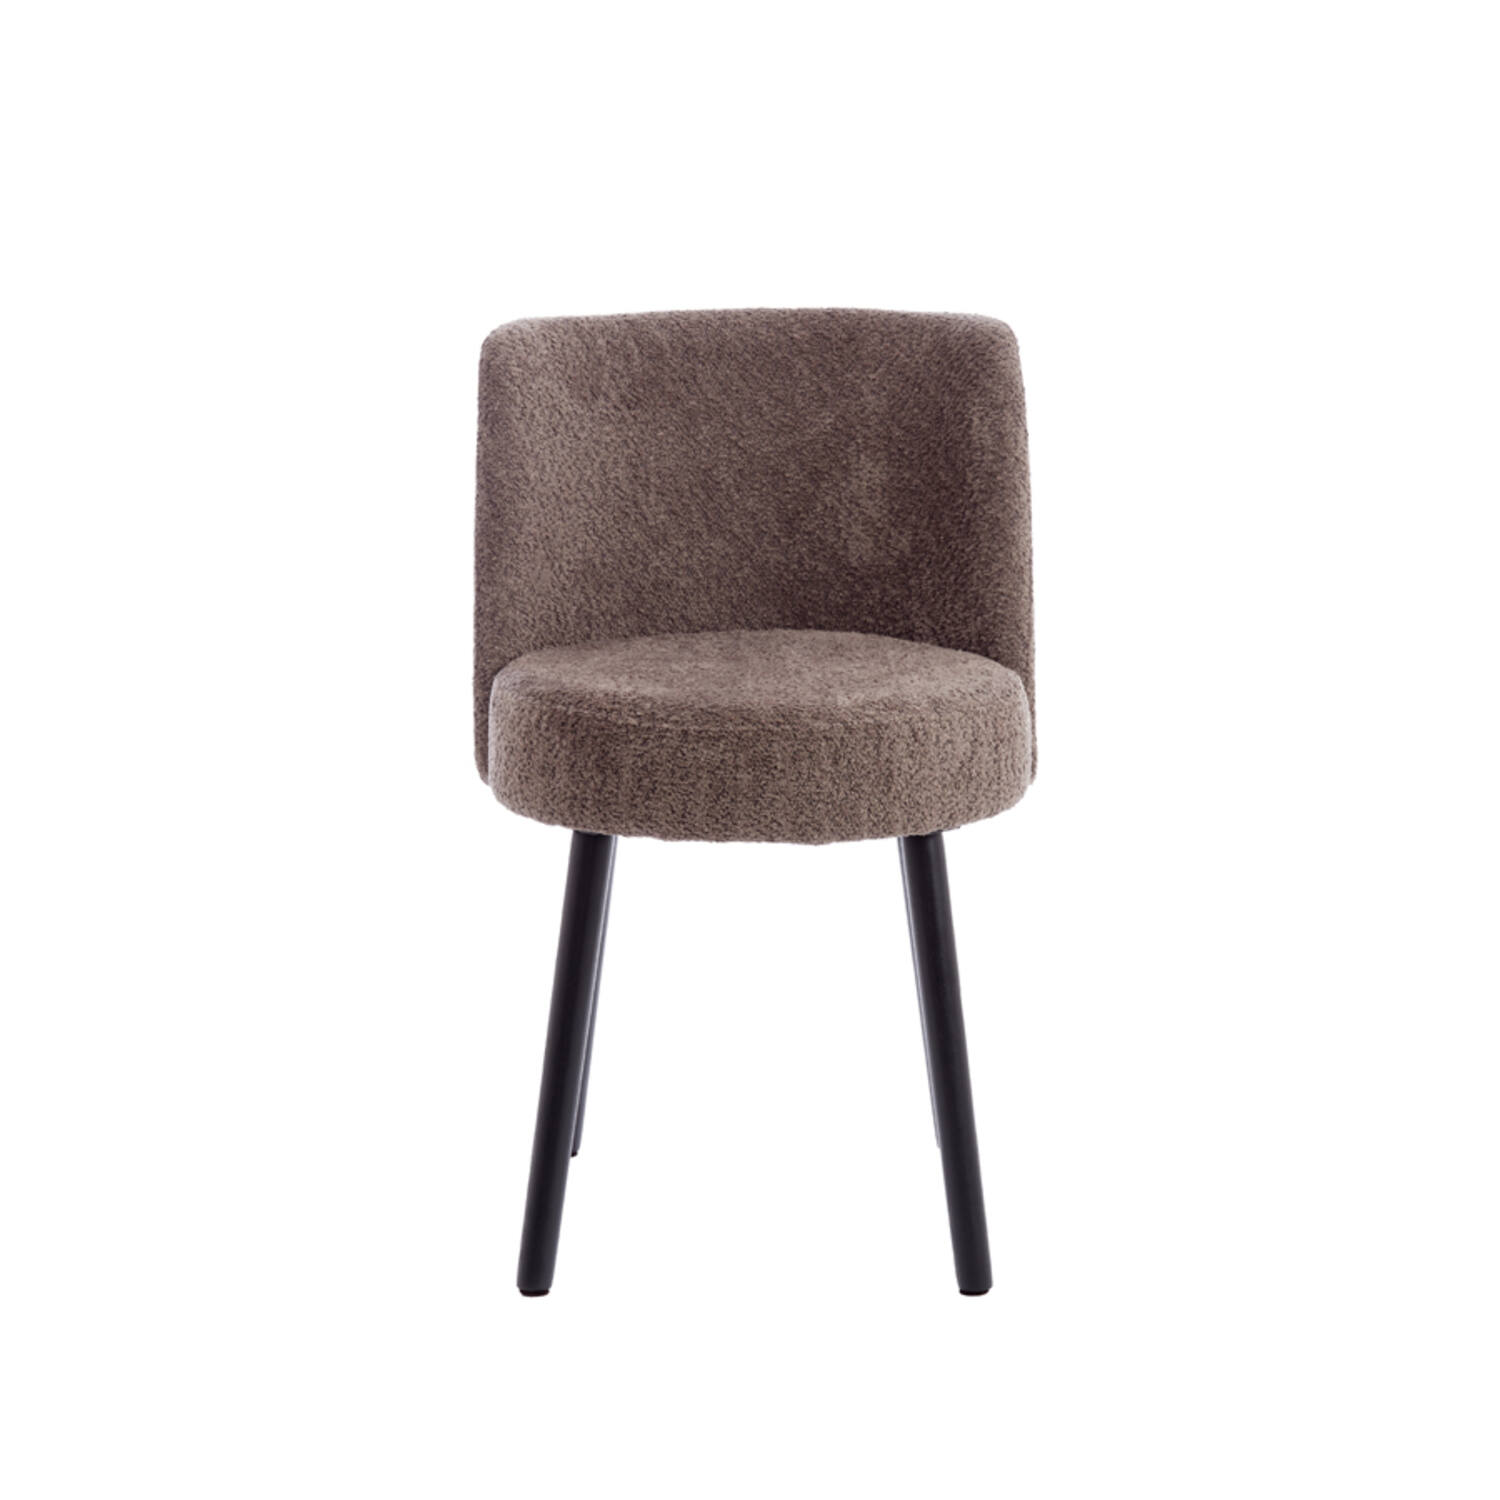 Dining chair 56x47x79 cm ECKLEY brown-black